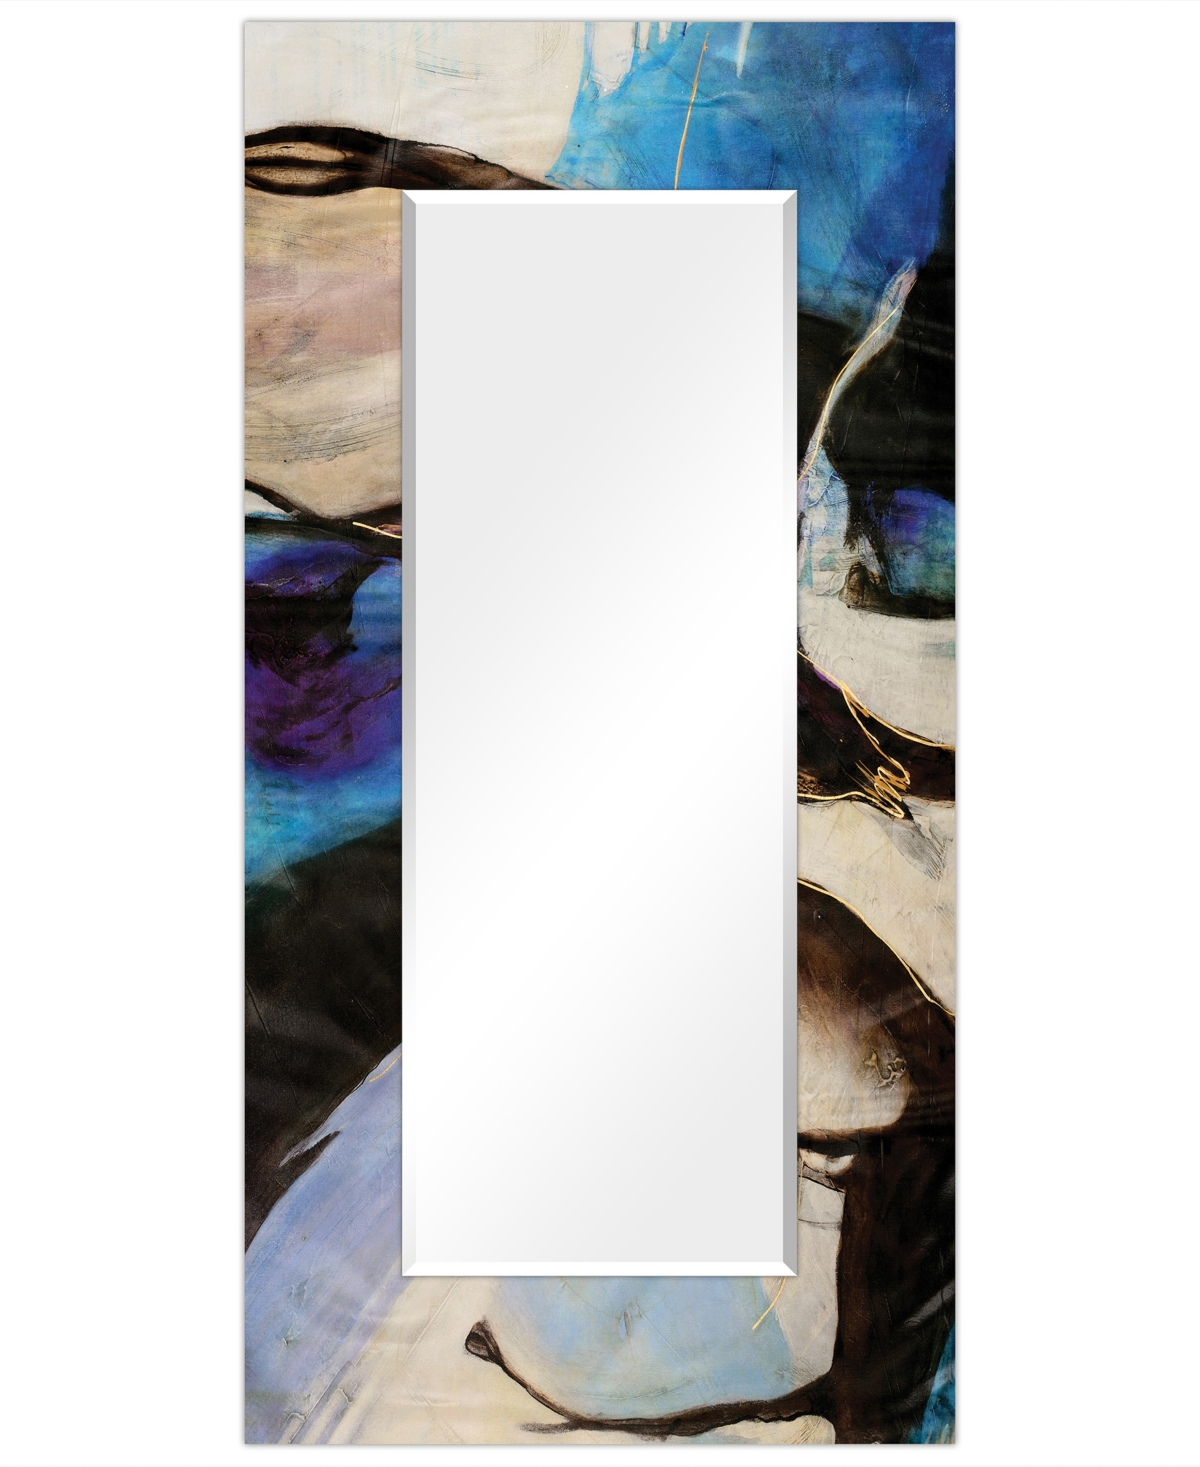 'Motivos' Rectangular On Free Floating Printed Tempered Art Glass Beveled Mirror, 72" x 36" - Multicolor